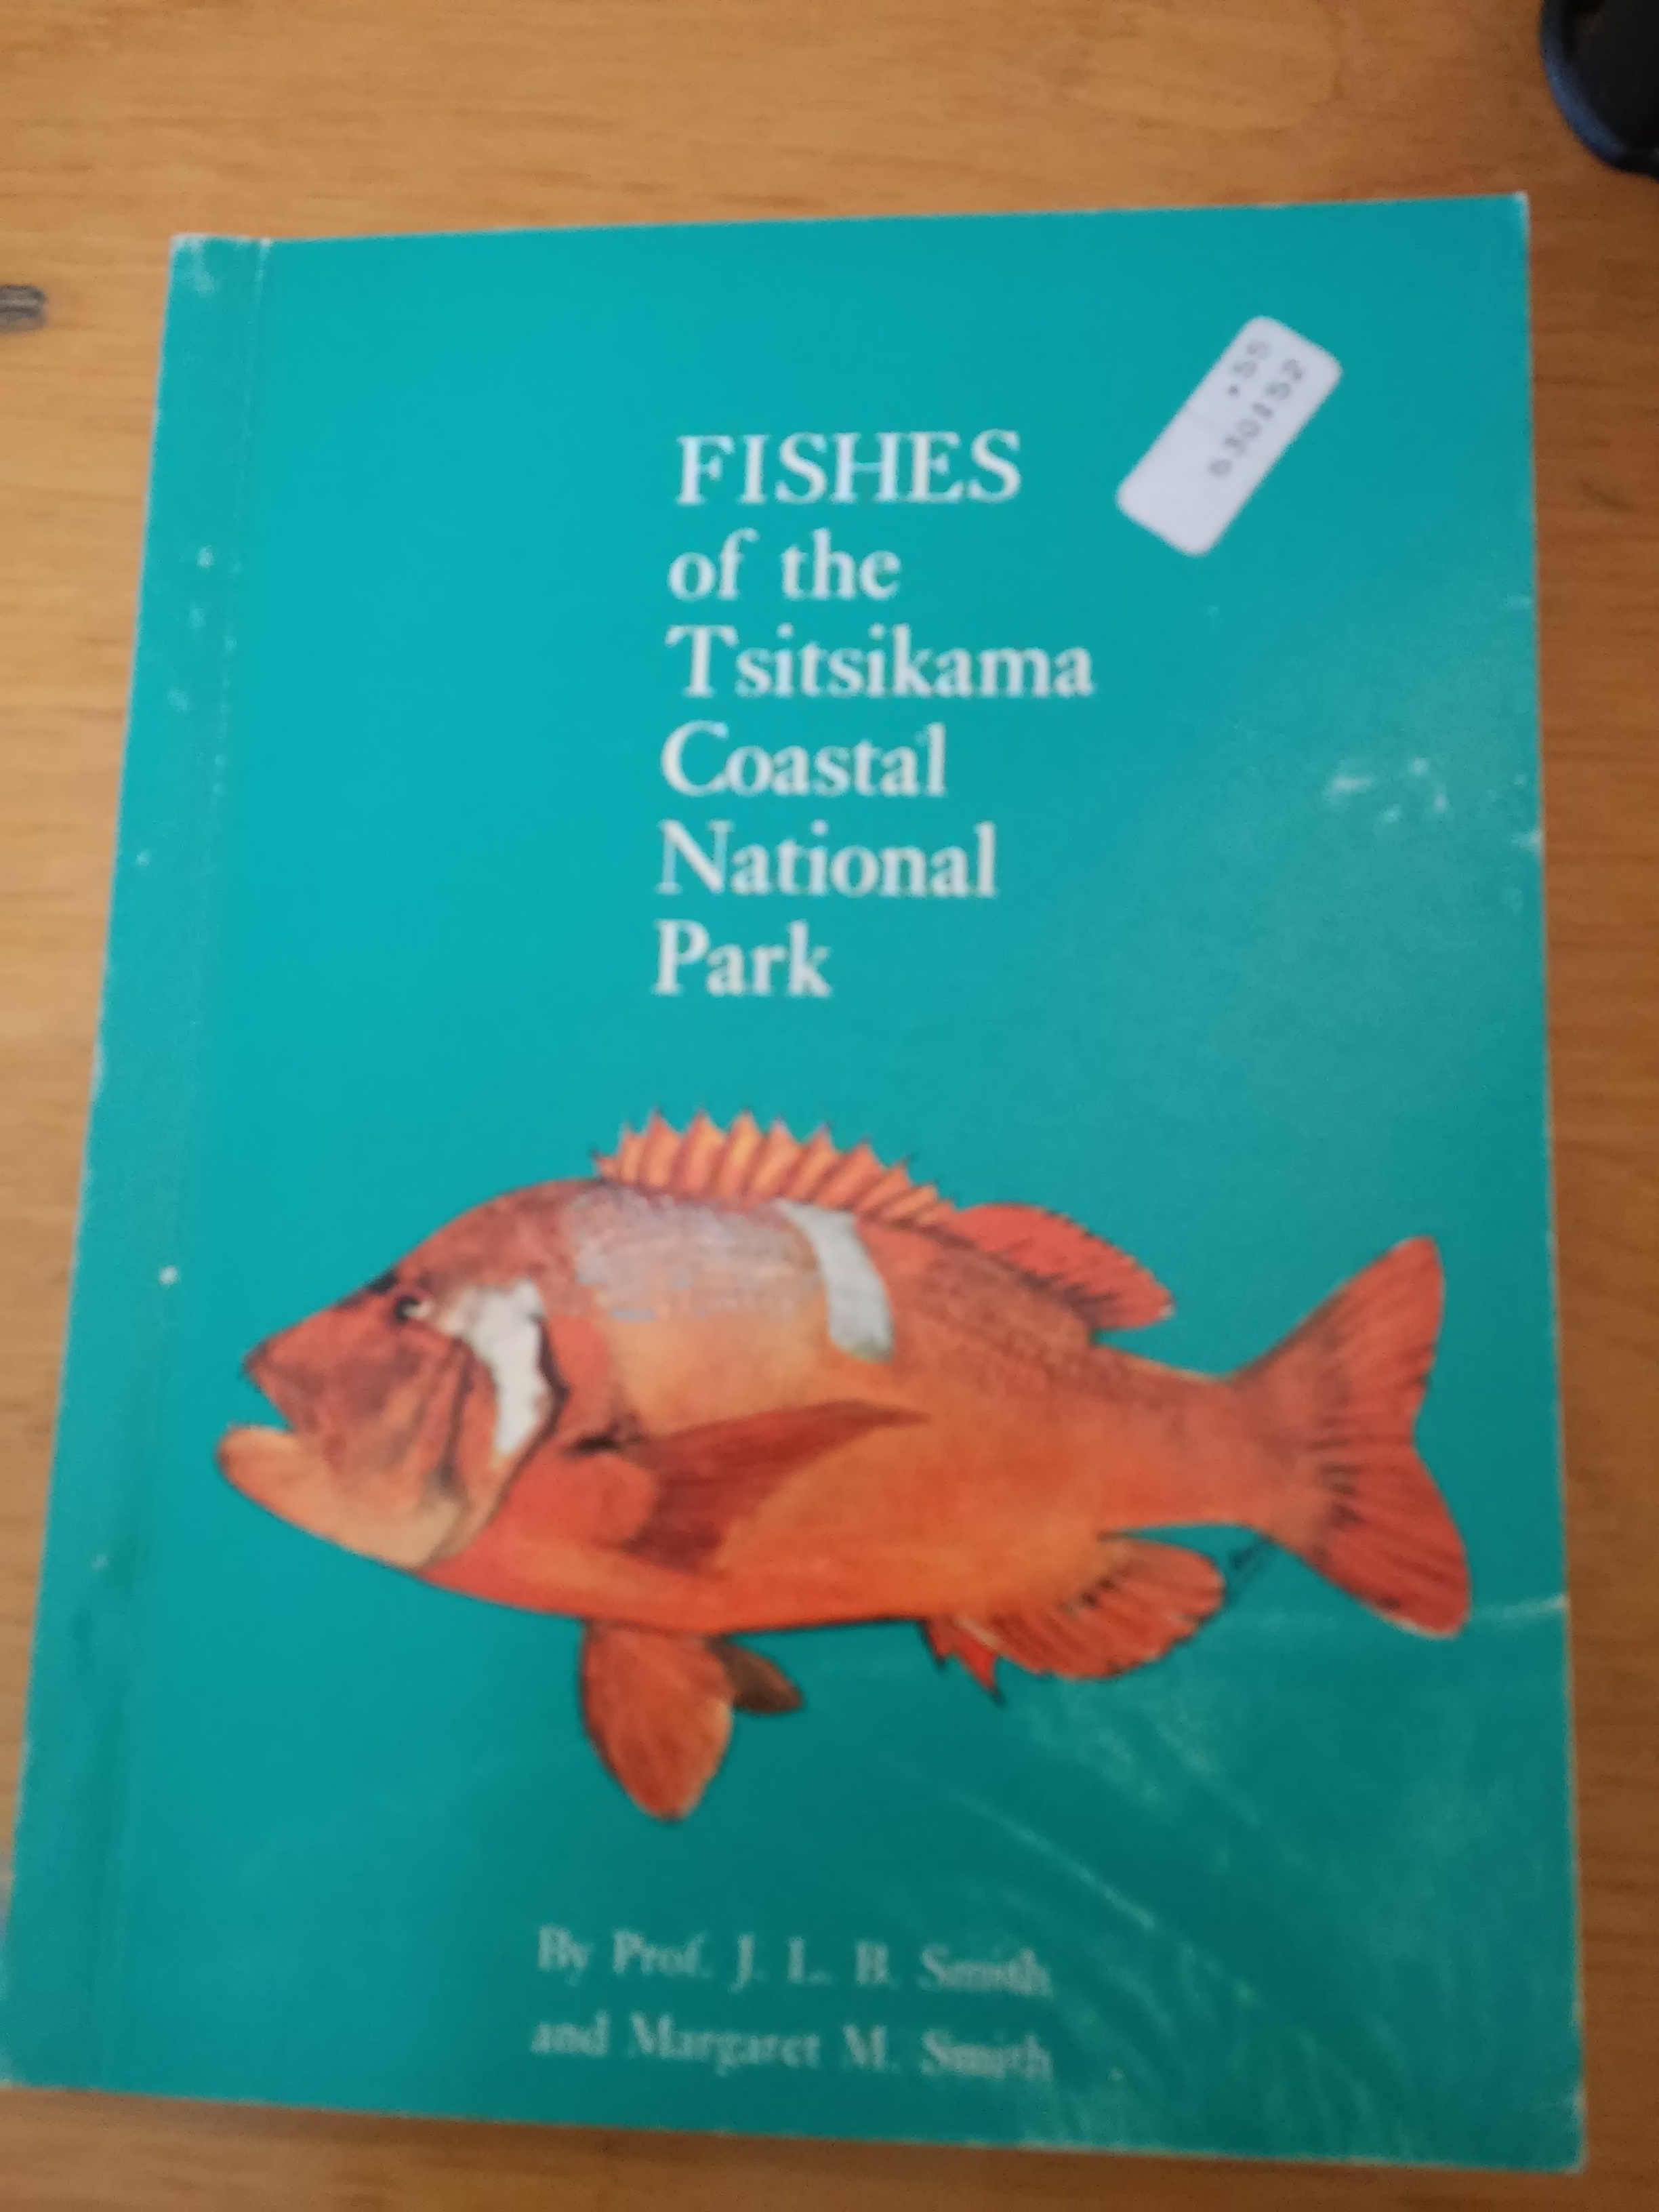 J. L. B. Smith, Margaret M. Smith: Fishes of the Tsitsikama Coastal National Park (Rippl-Rónai Múzeum CC BY-NC-SA)